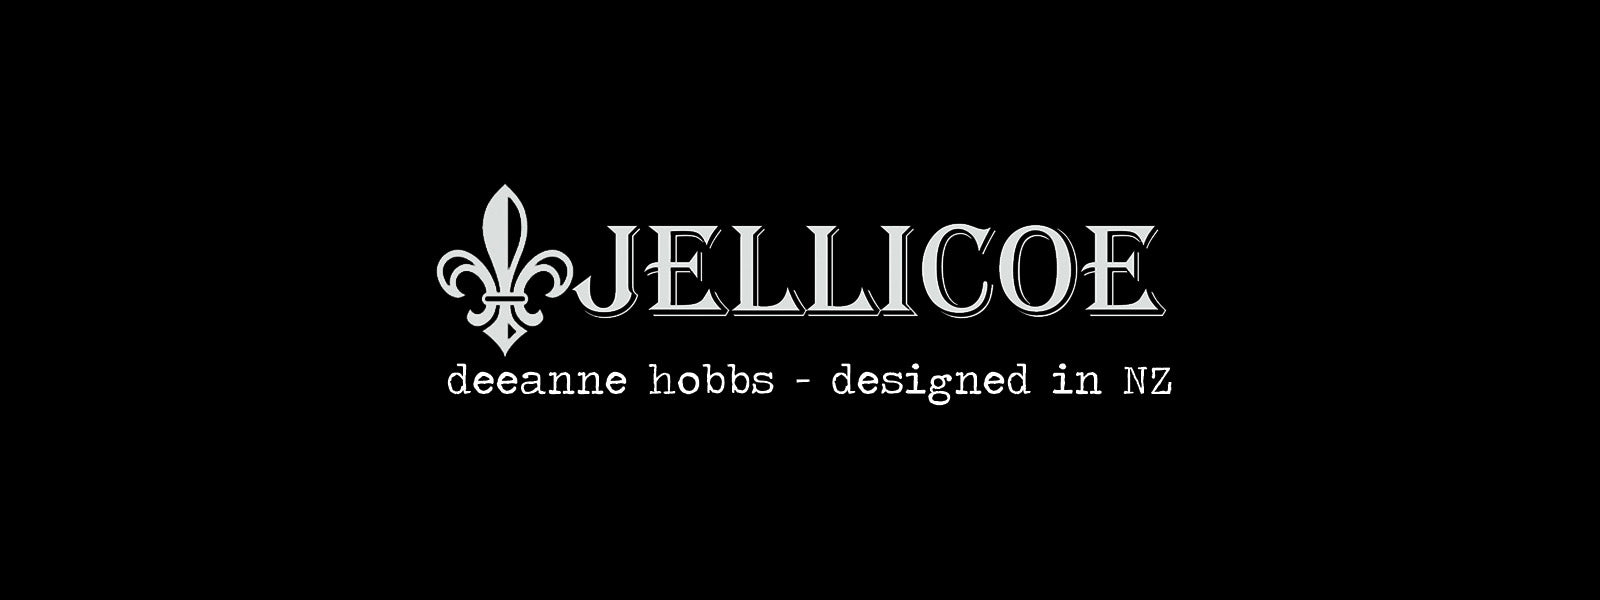 Jellicoe logo for footer